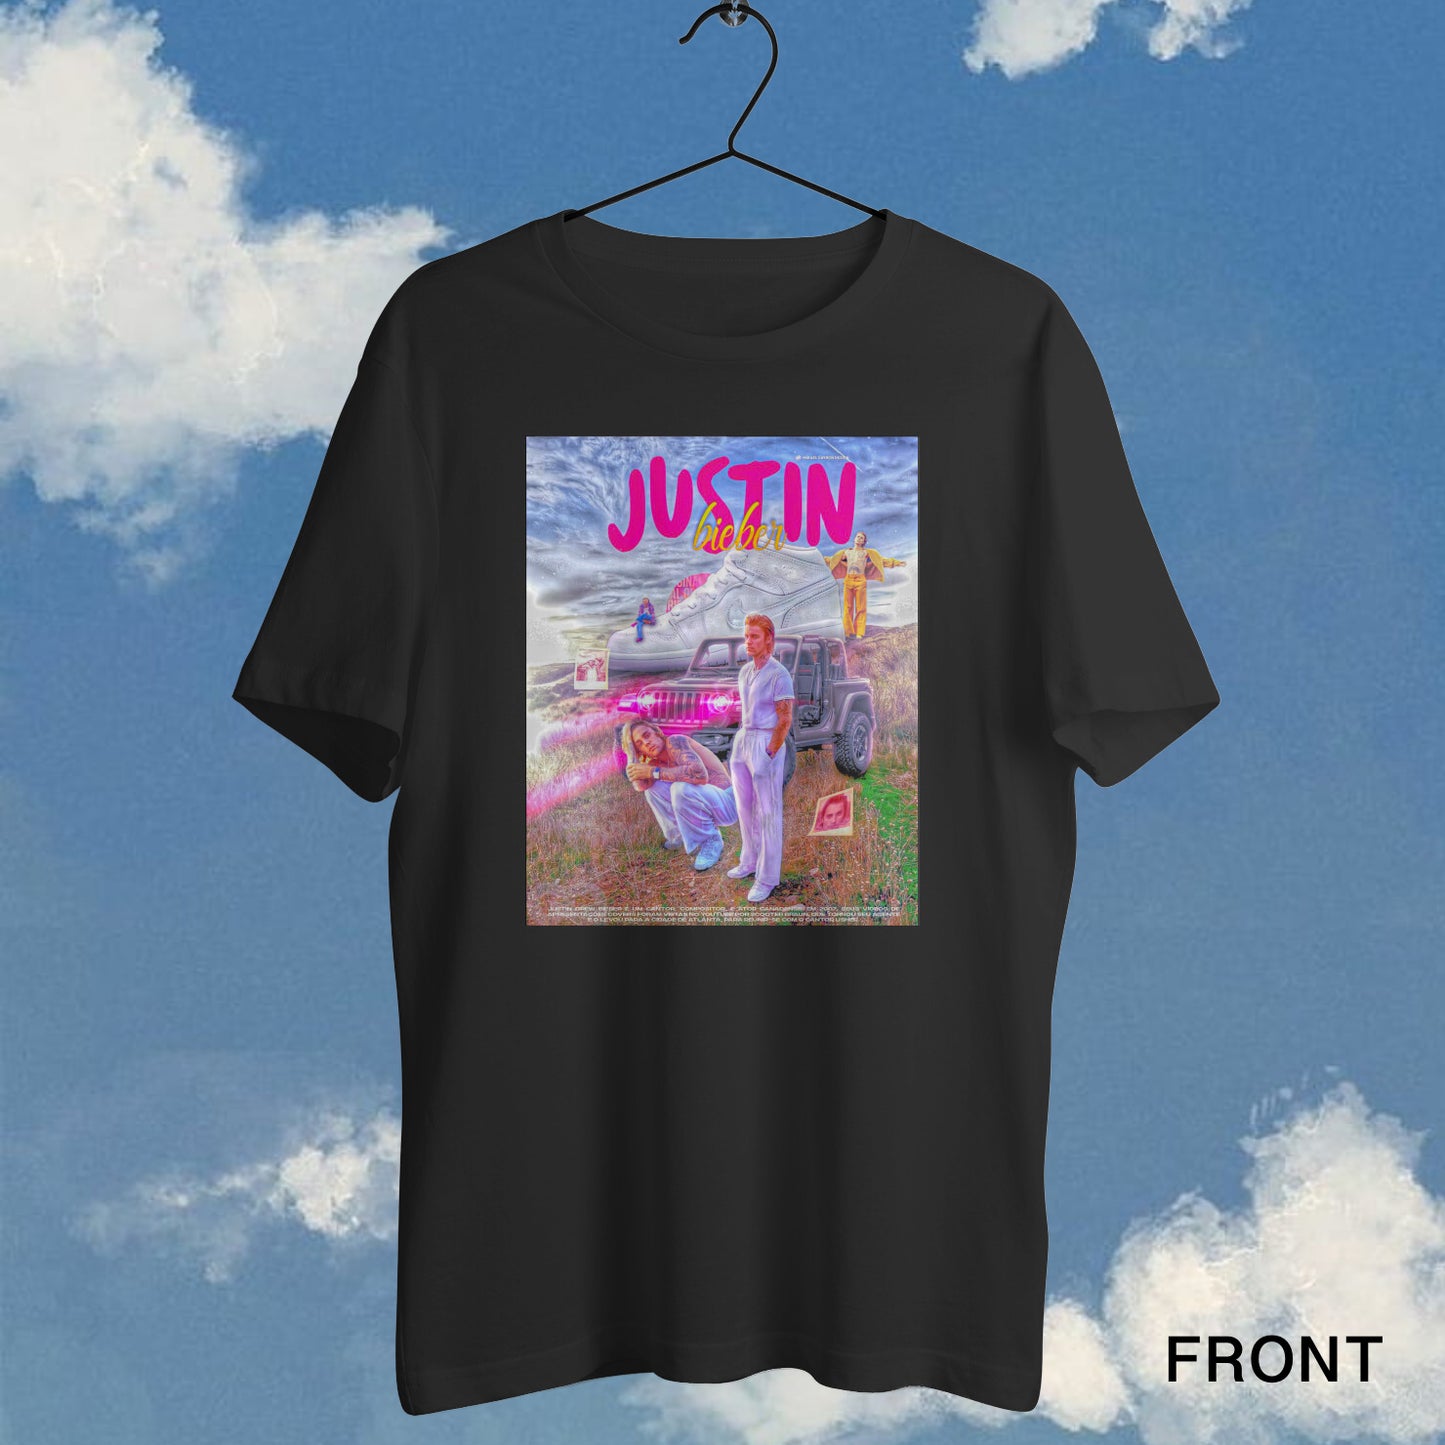 Justin Bieber FAN T-shirt